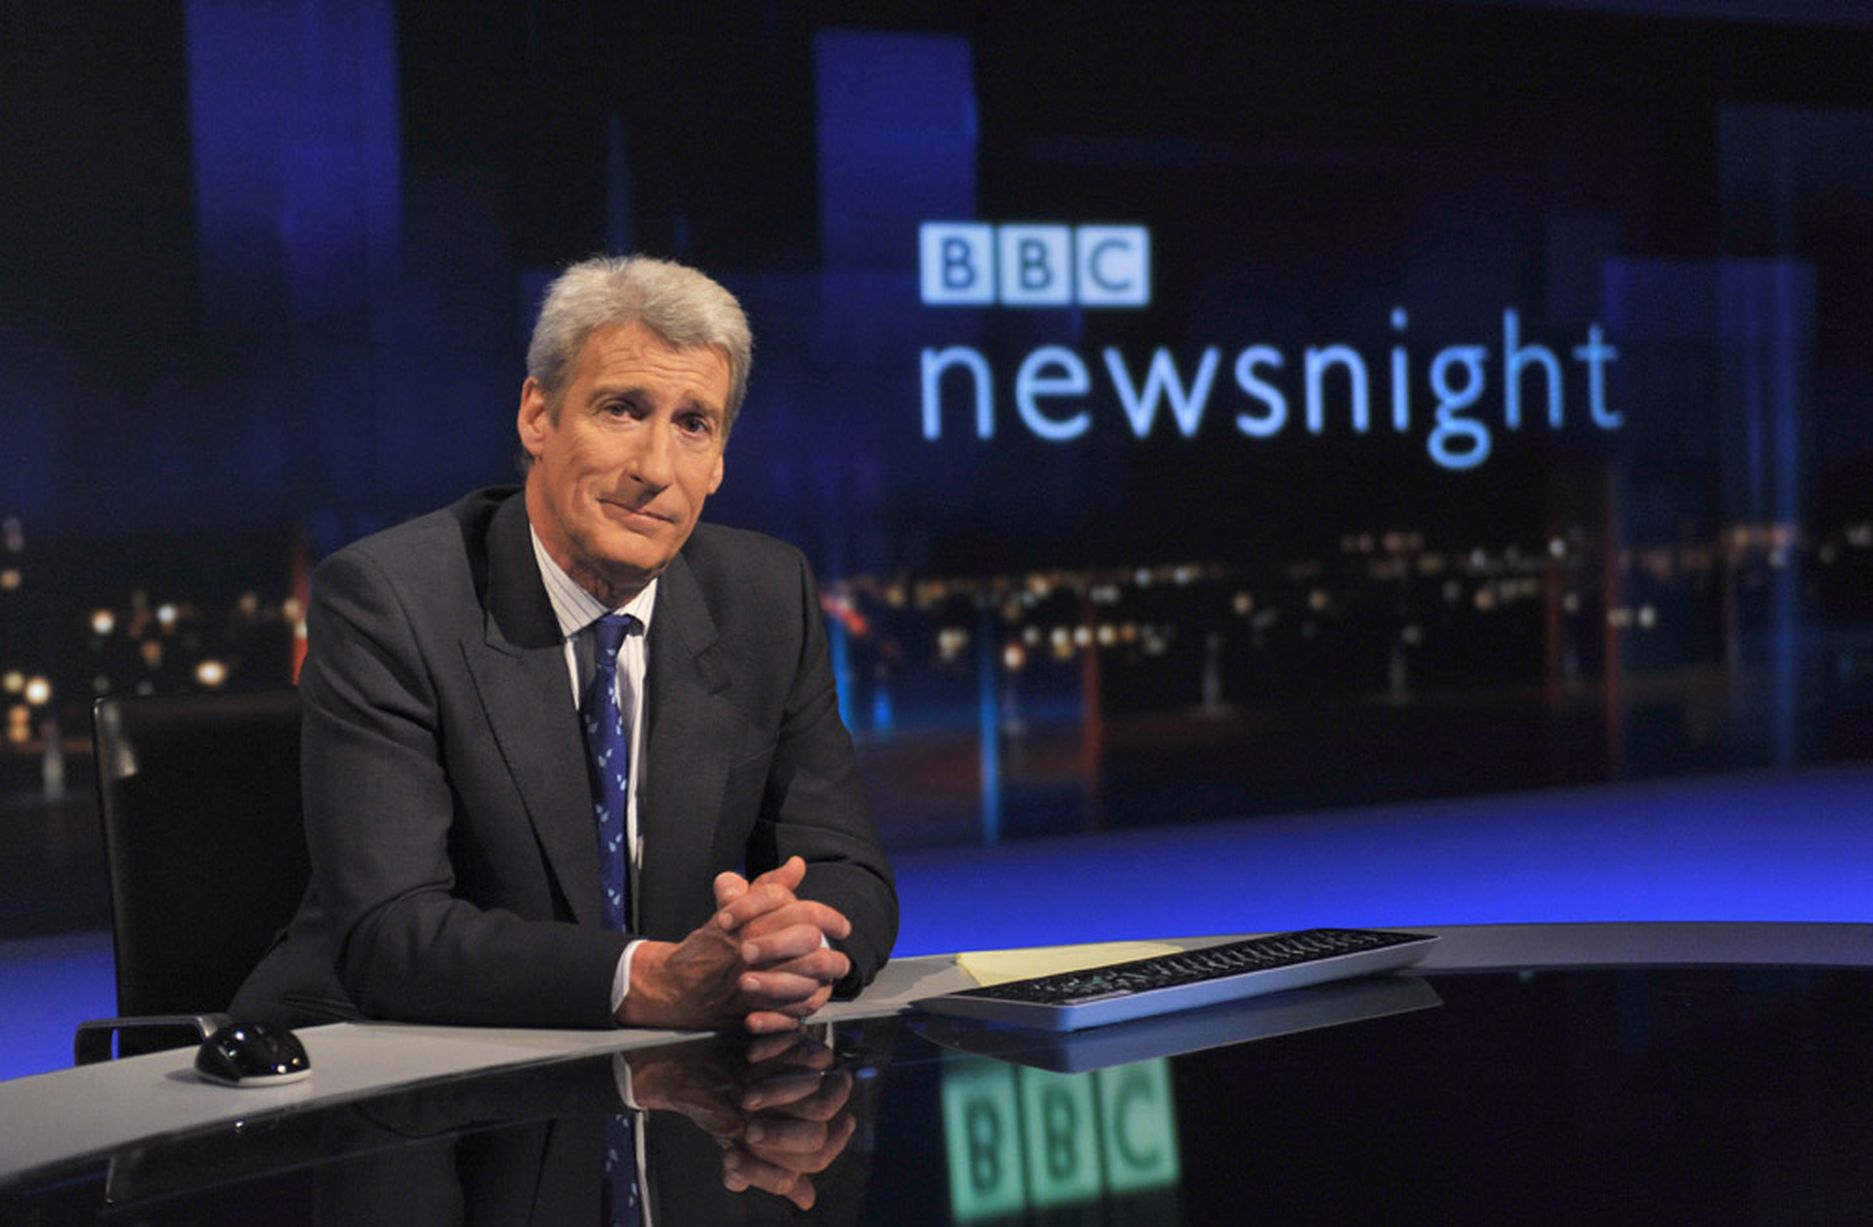 BBC Newsnight with Jeremy Paxman